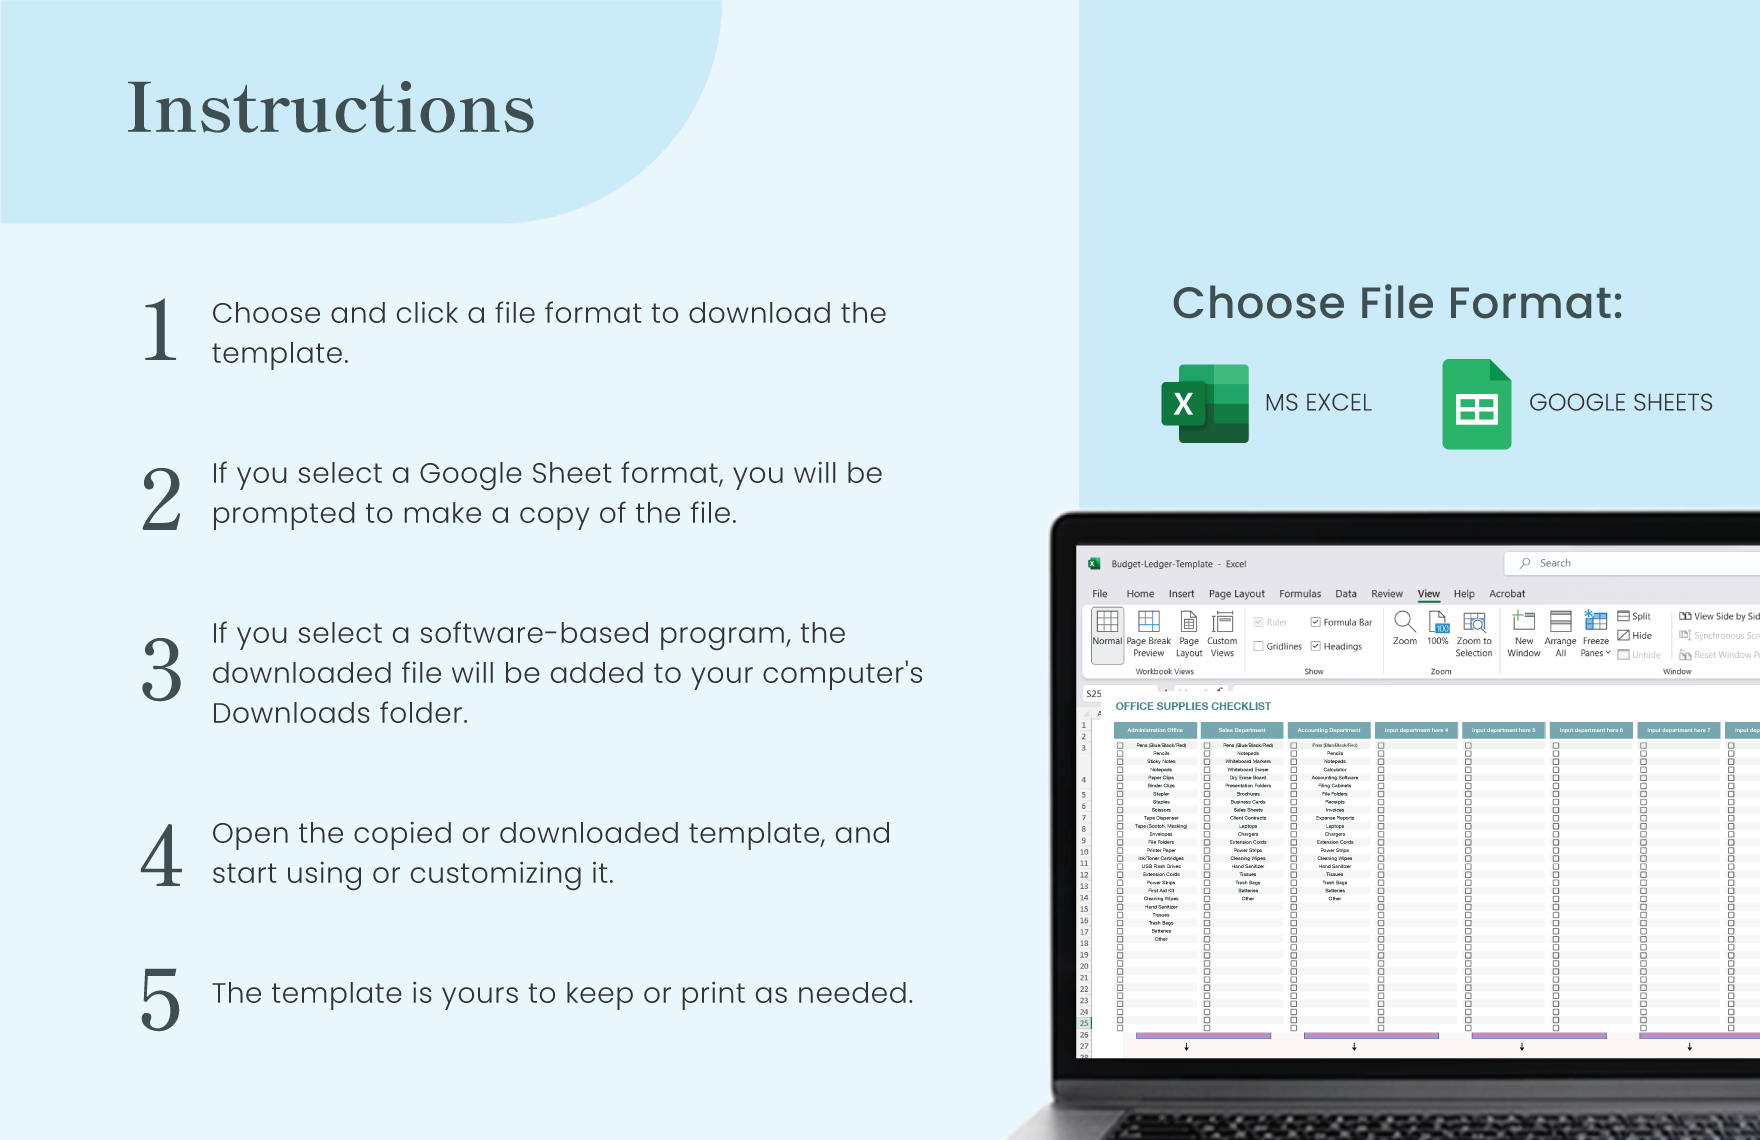 Office Supplies Checklist Template